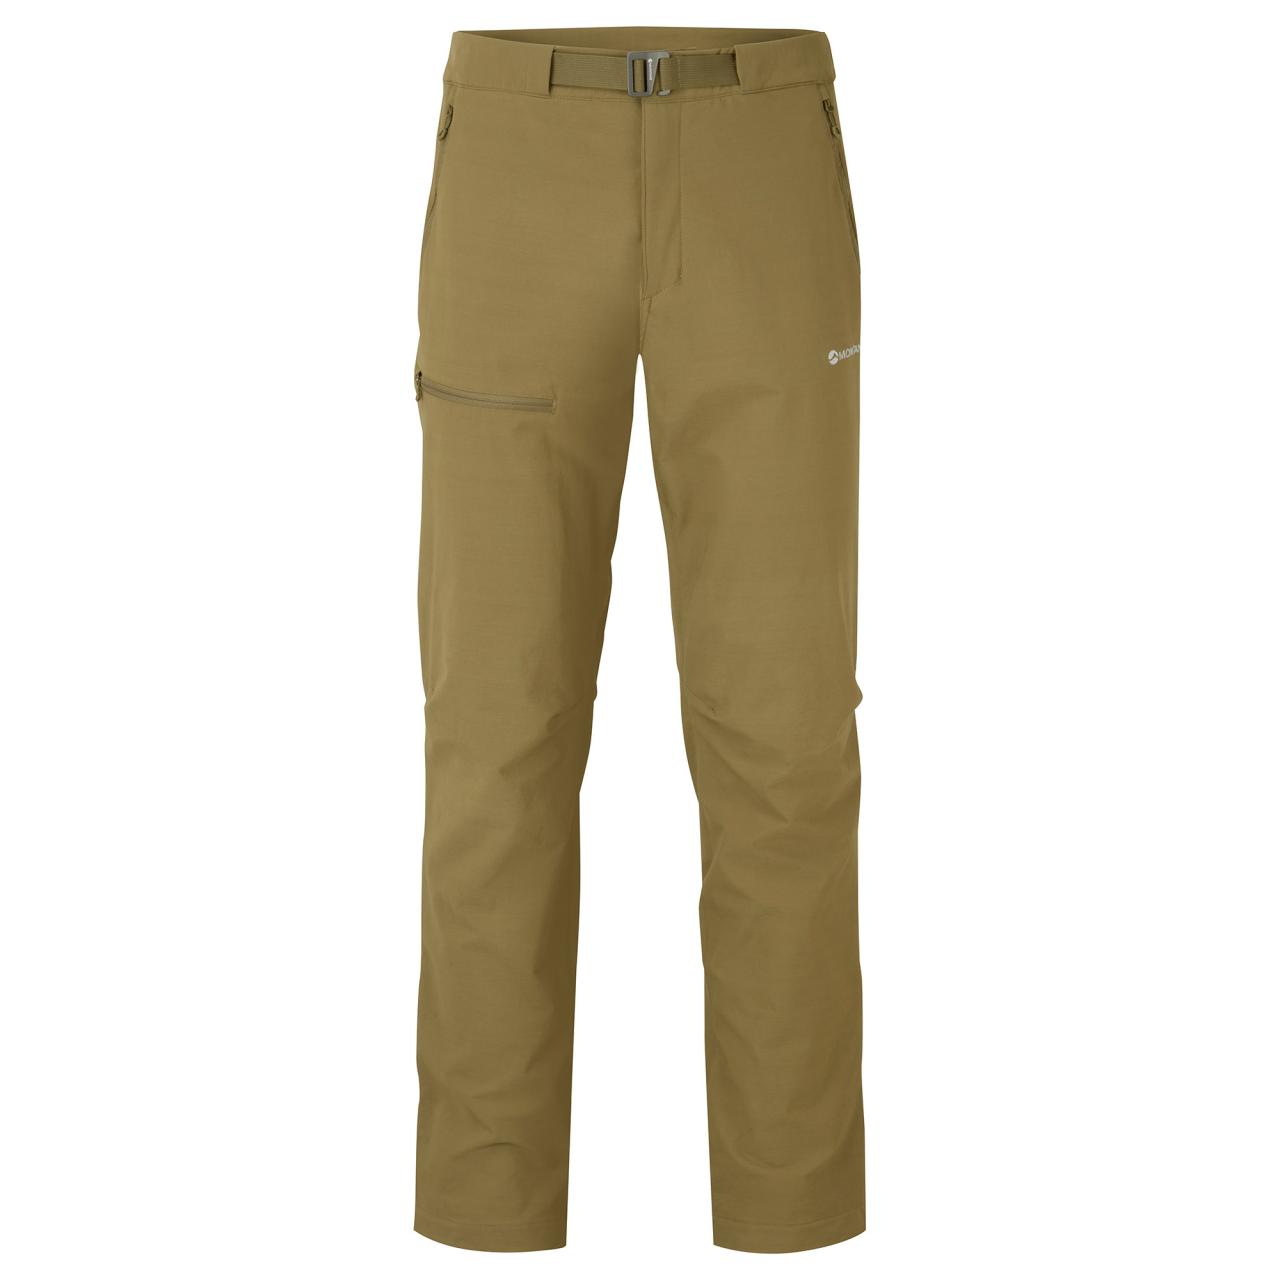 TENACITY PANTS REG LEG-OLIVE-32/M pánské kalhoty zelené